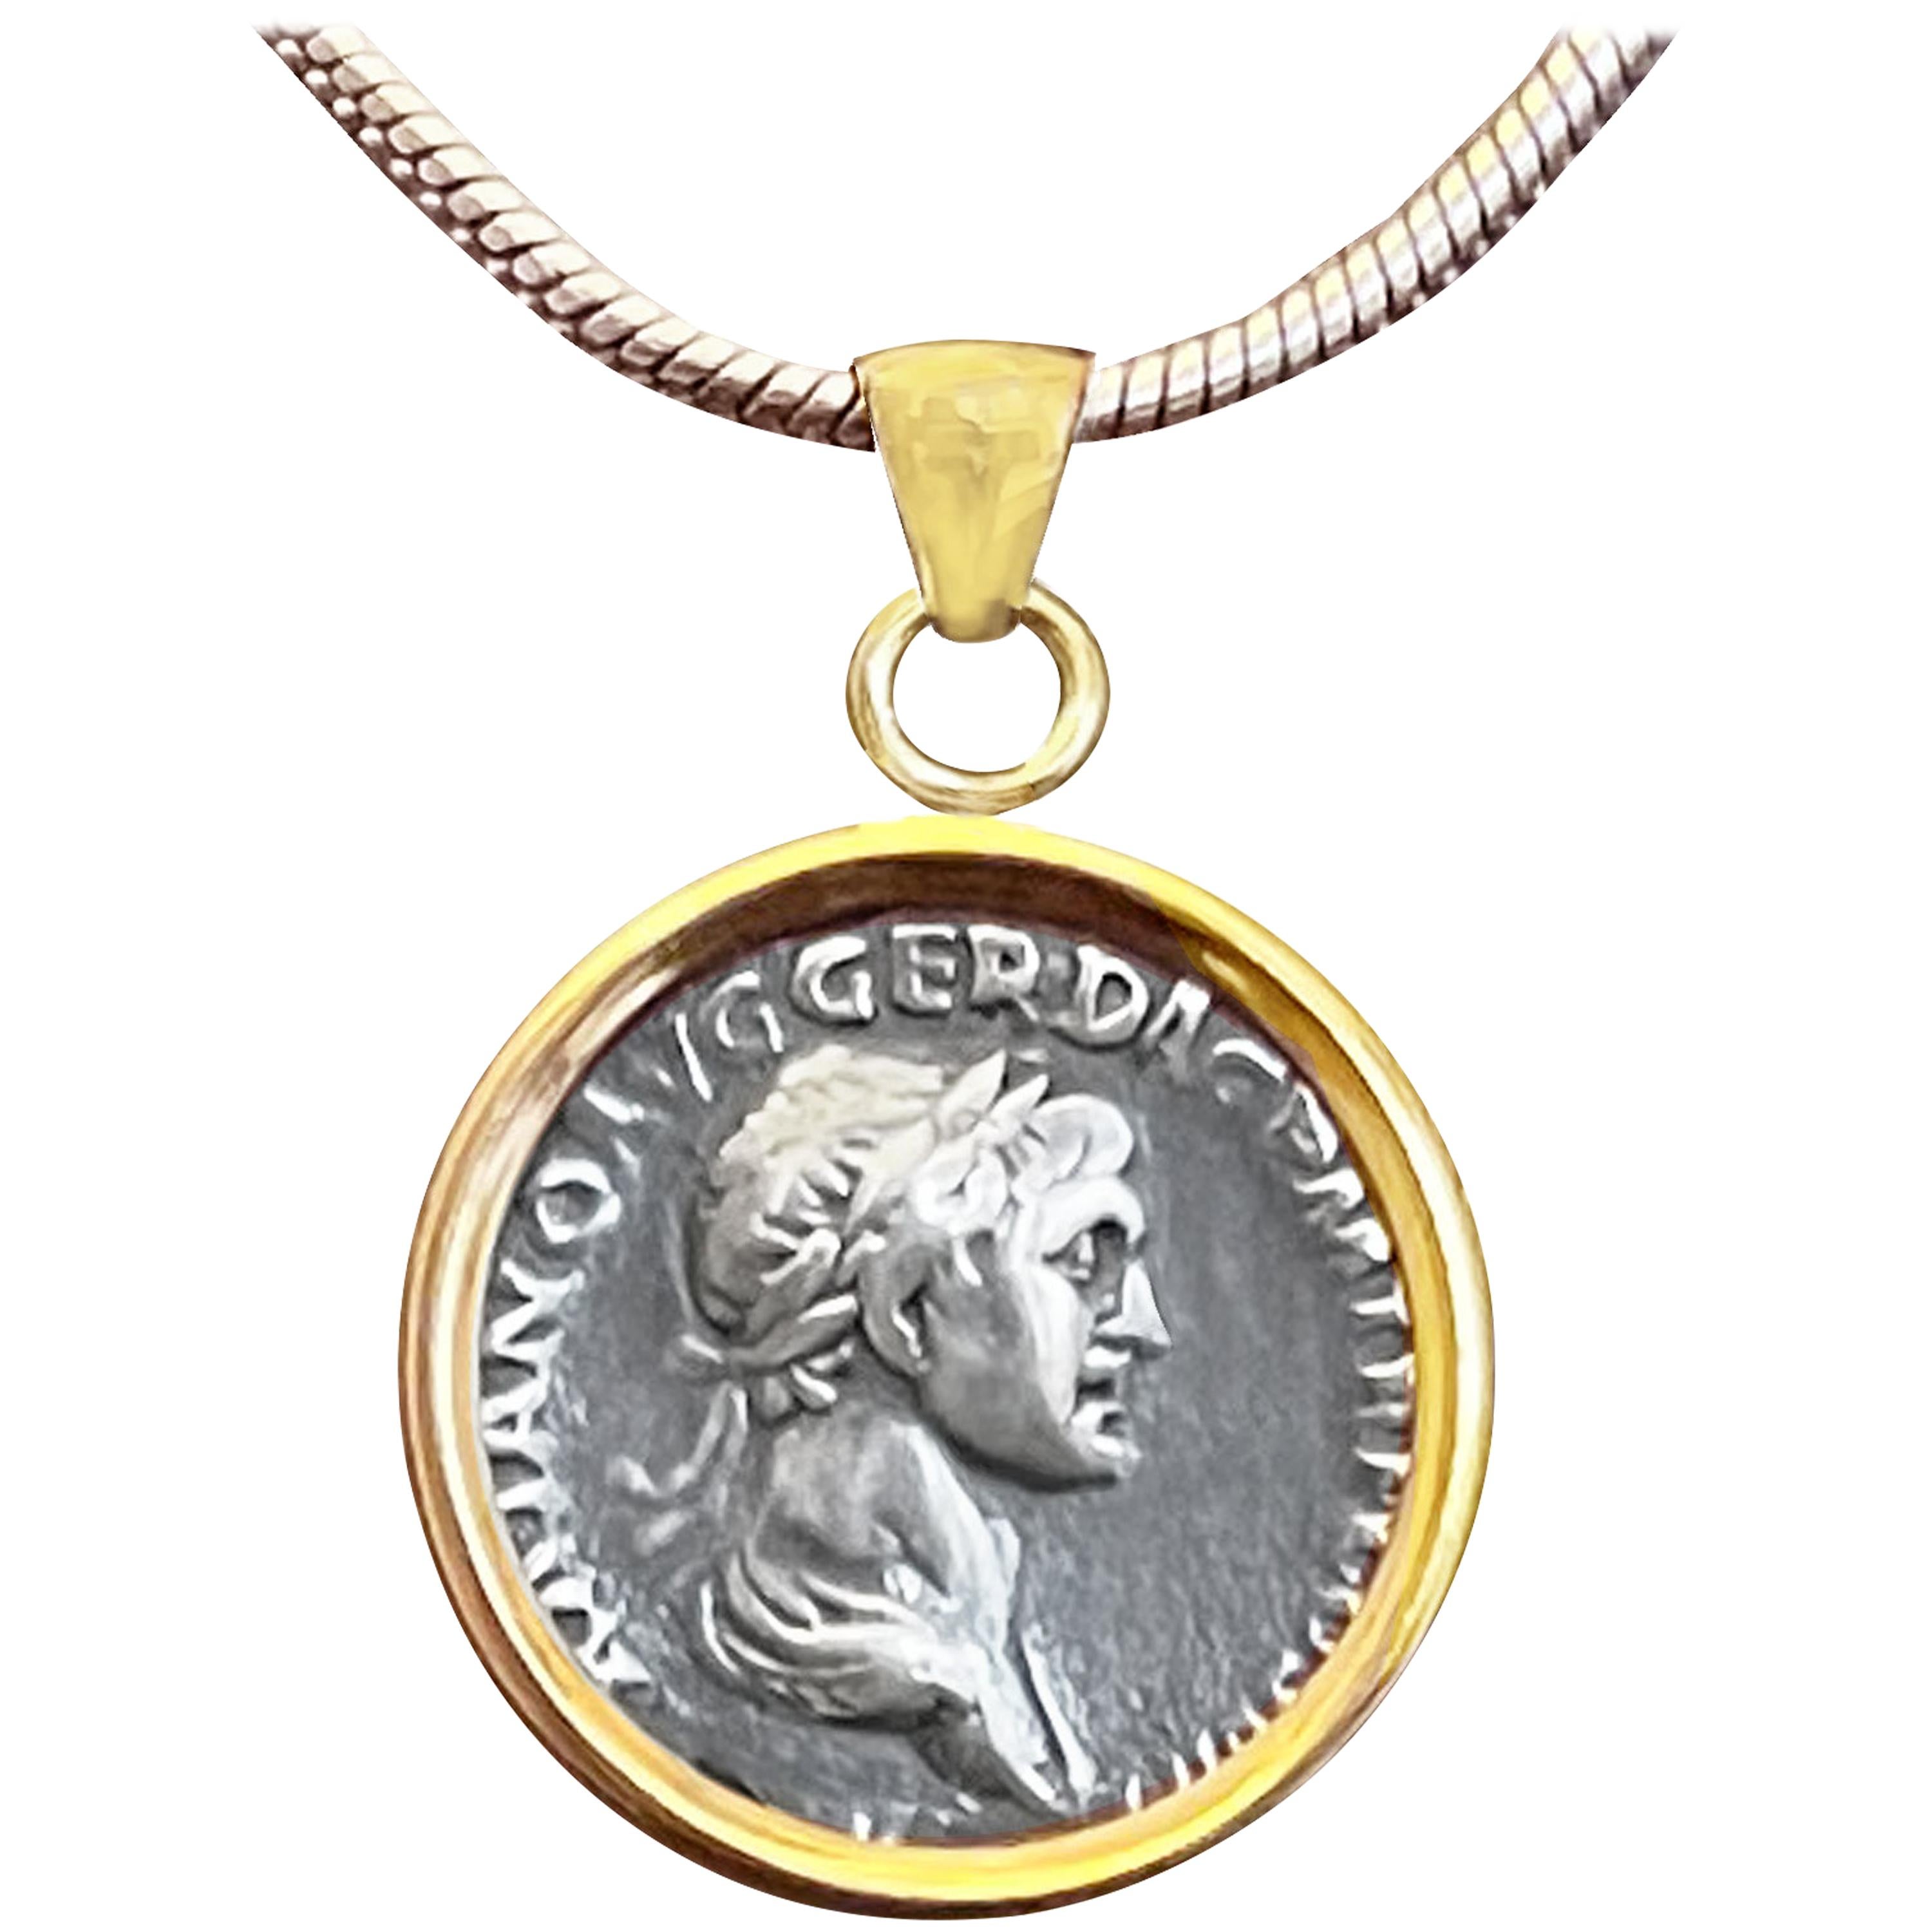 Authentic Roman Coin 18 Karat Gold Pendant Depicting Emperor Trajan '98-117 AD'